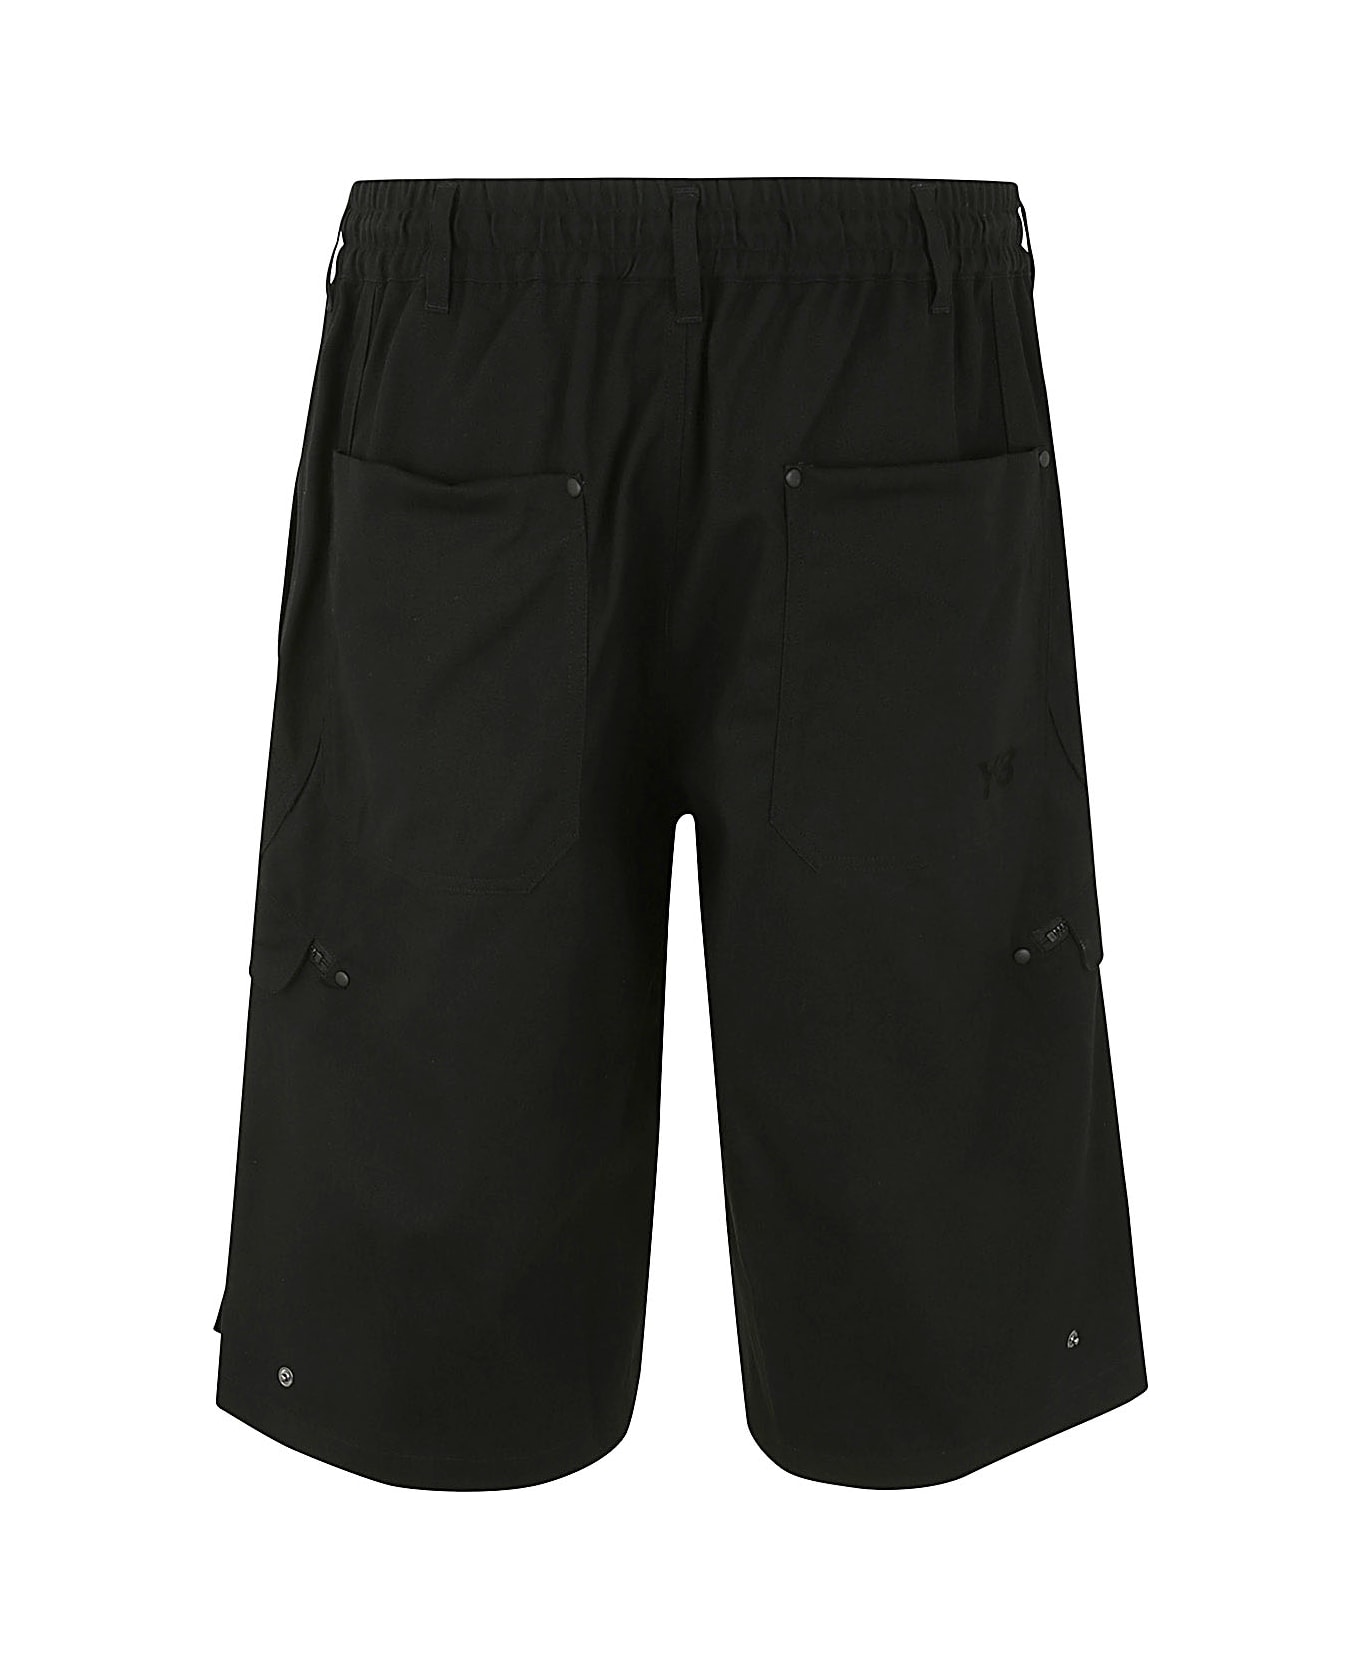 Y-3 Workwear Shorts - Black ショートパンツ